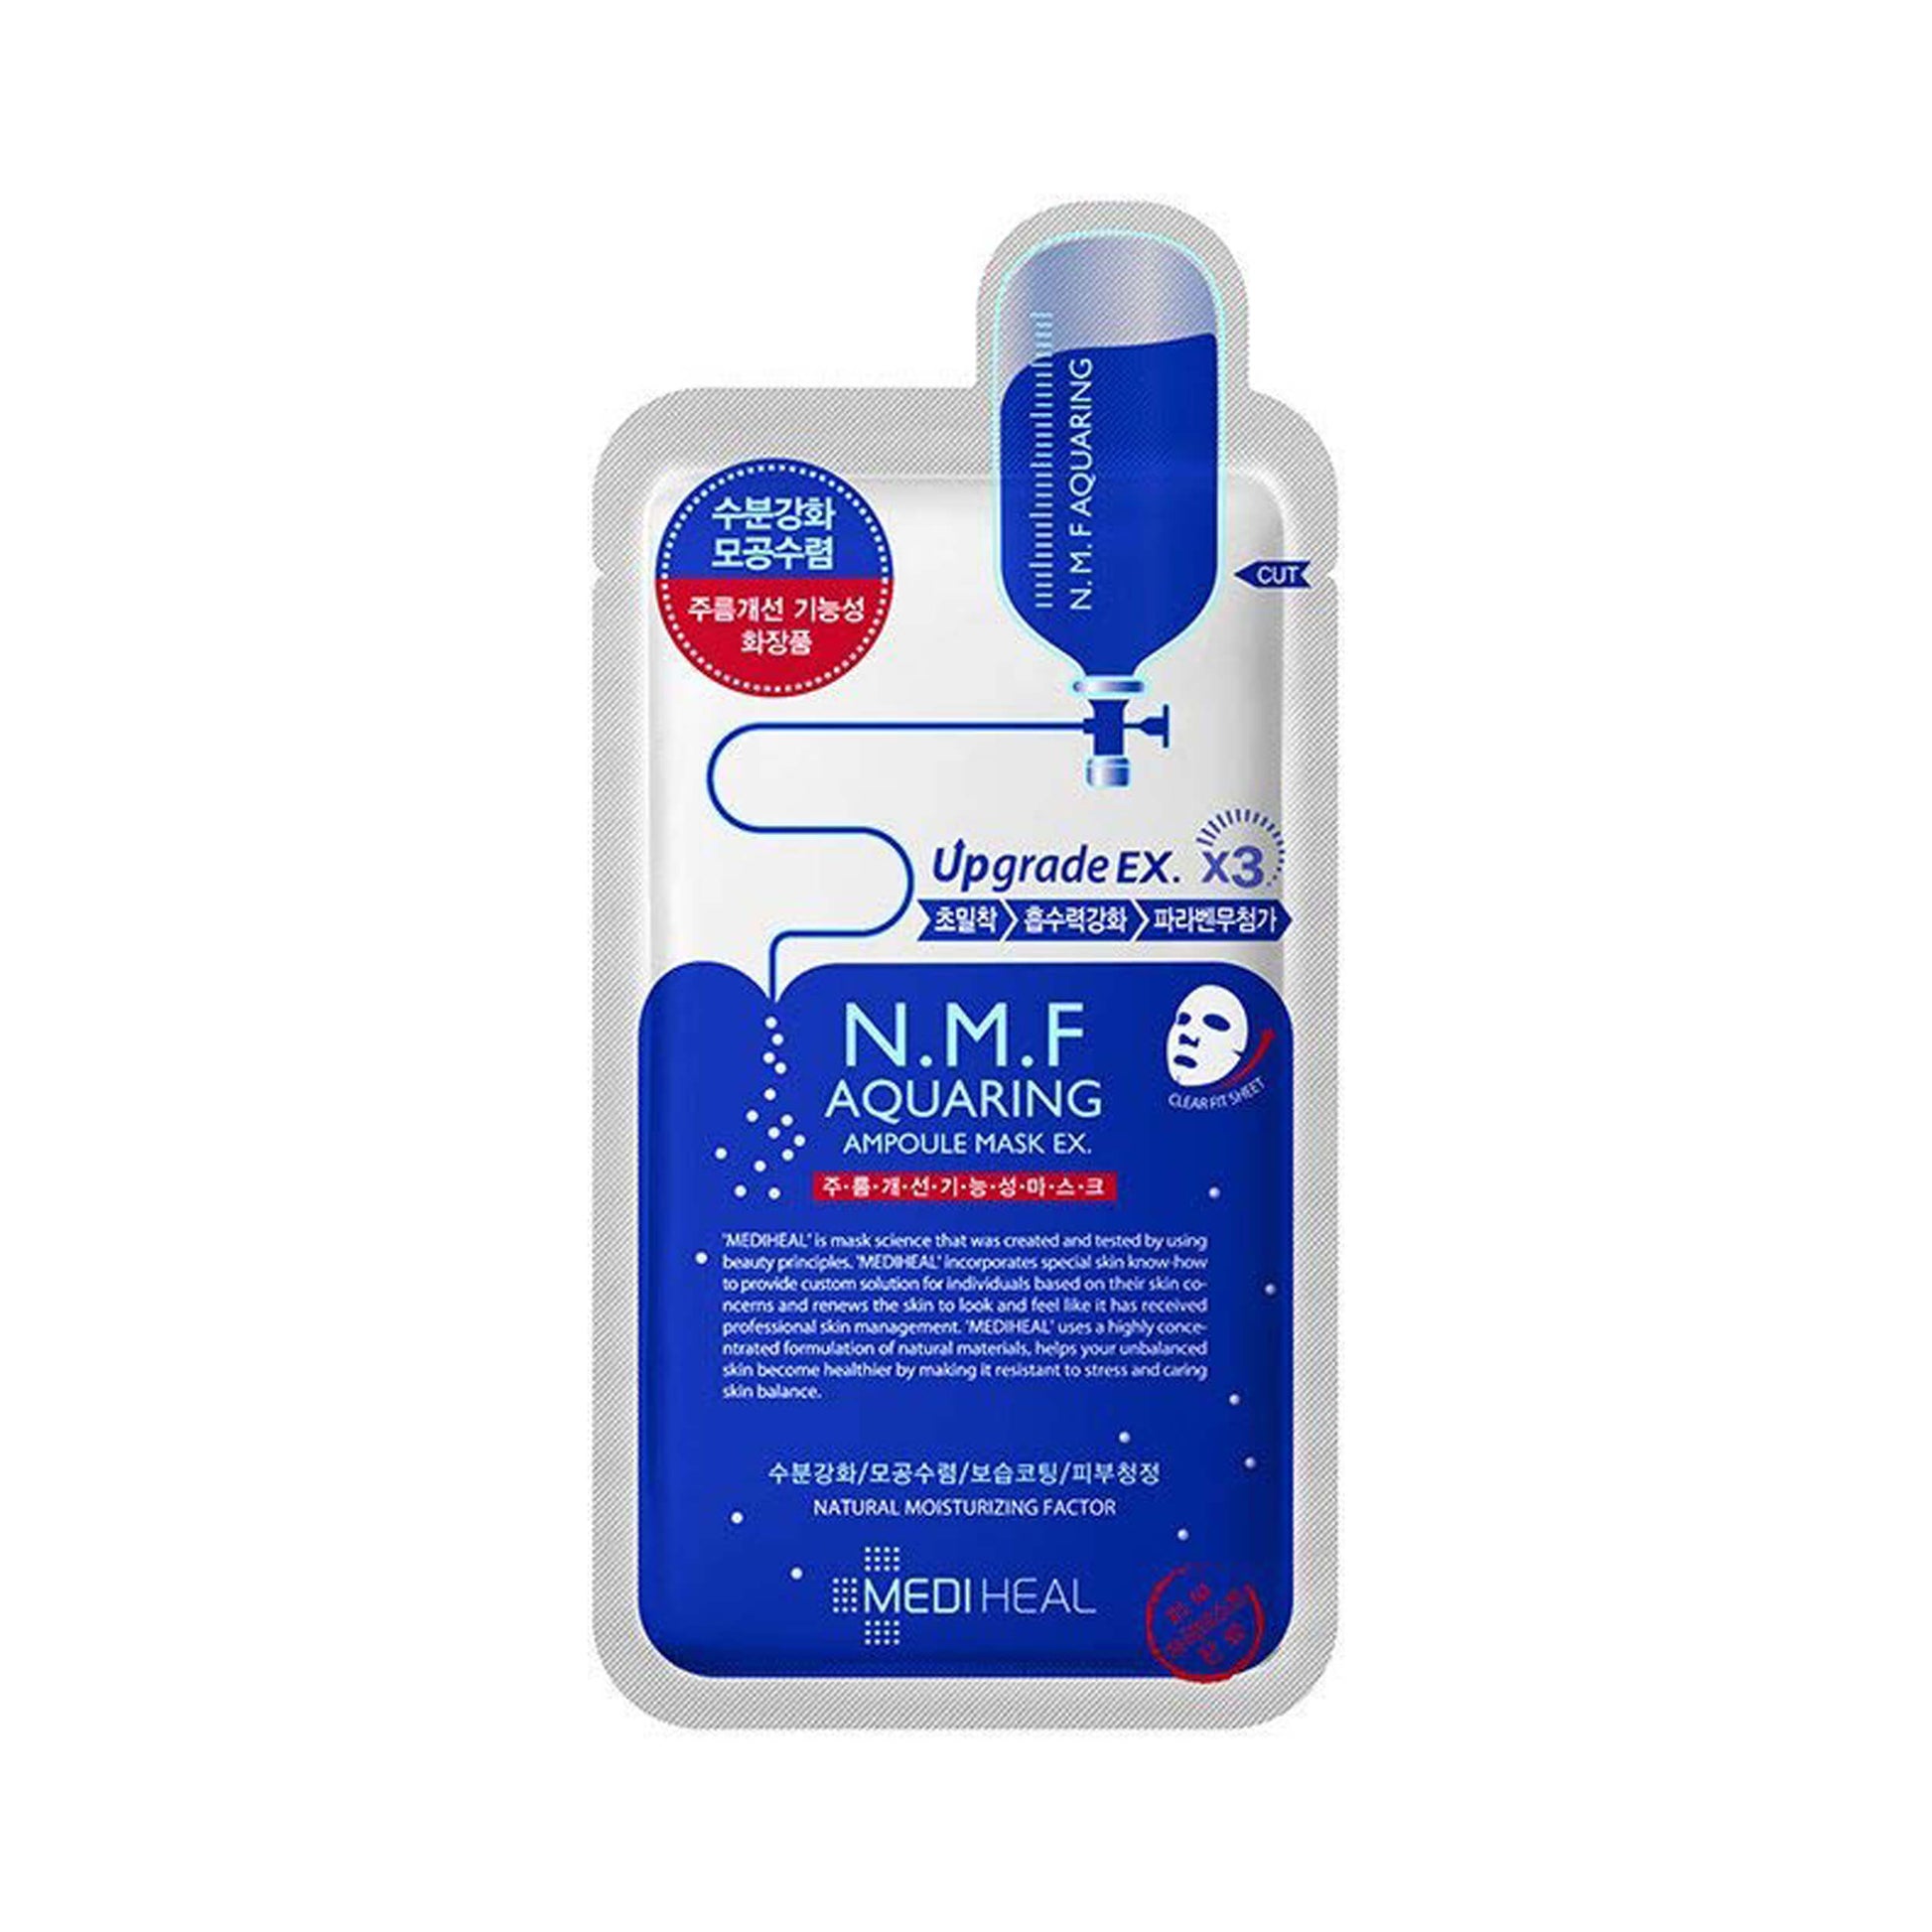 Mediheal N.M.F Aquaring Ampolue Mask EX 10 Sheets